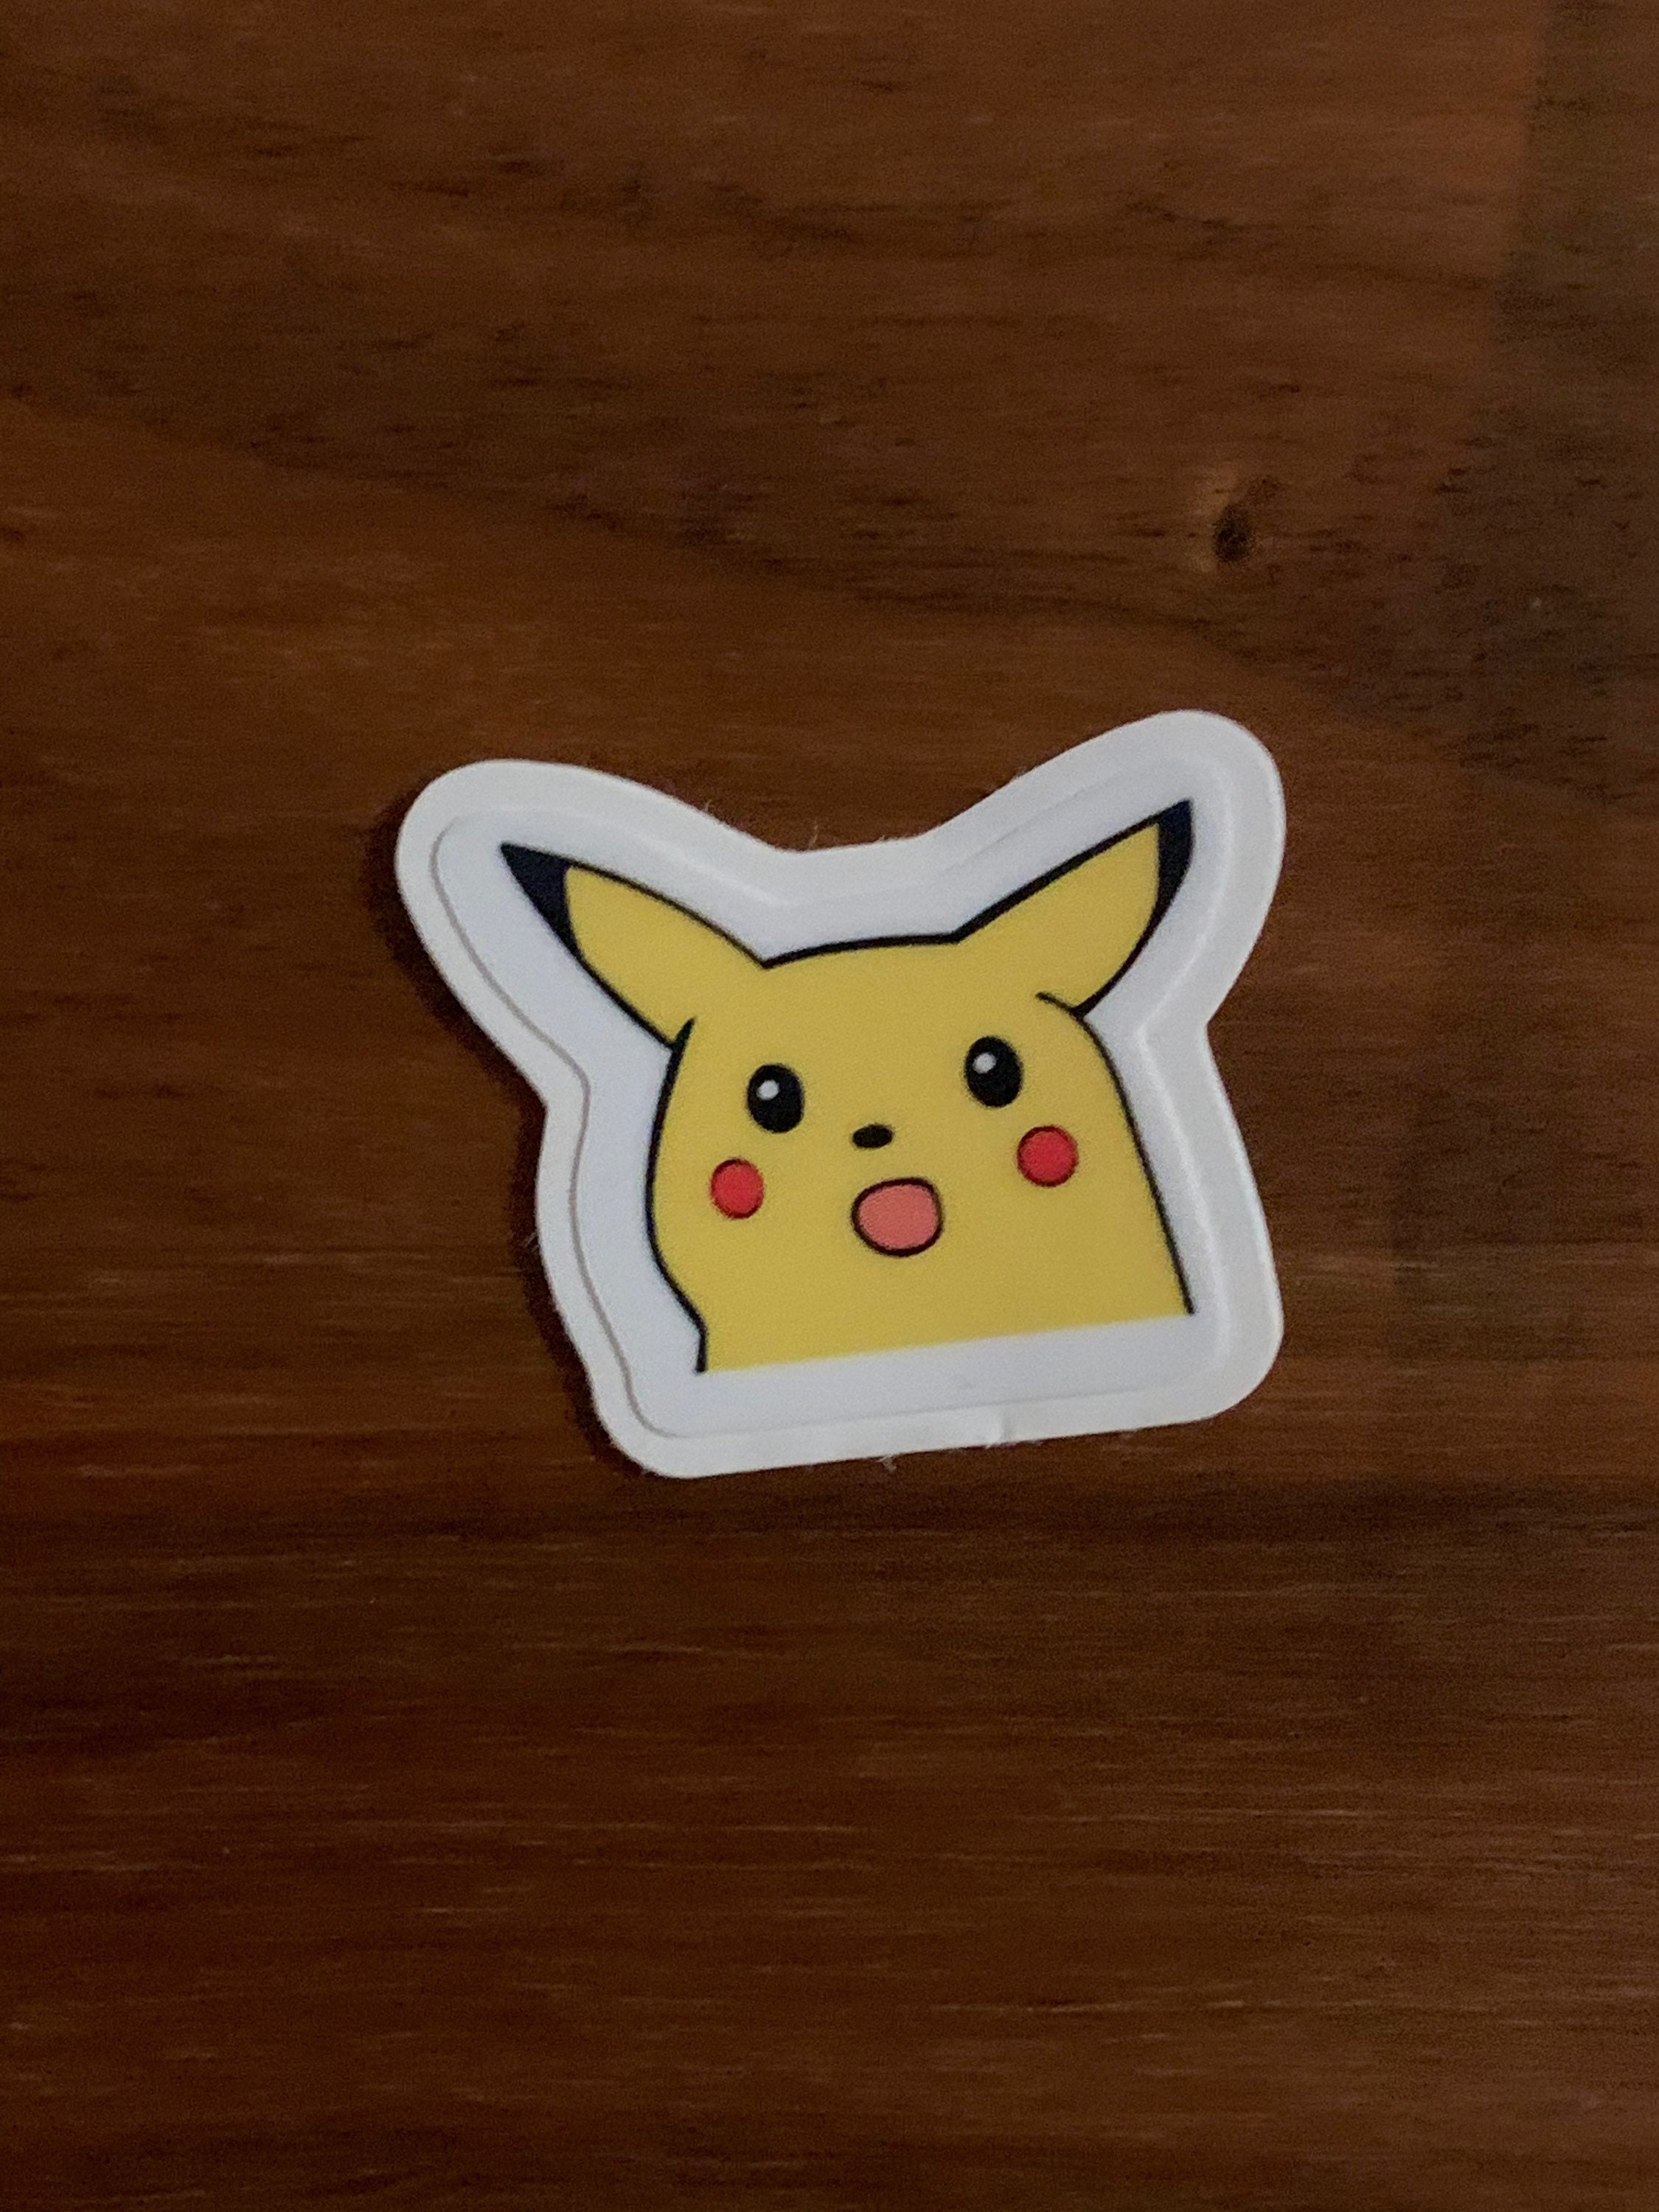 Surprised Pikachu Meme Vinyl Sticker Meme Water Bottle, Laptop, Phone,  Hydro Water Resistant Fun